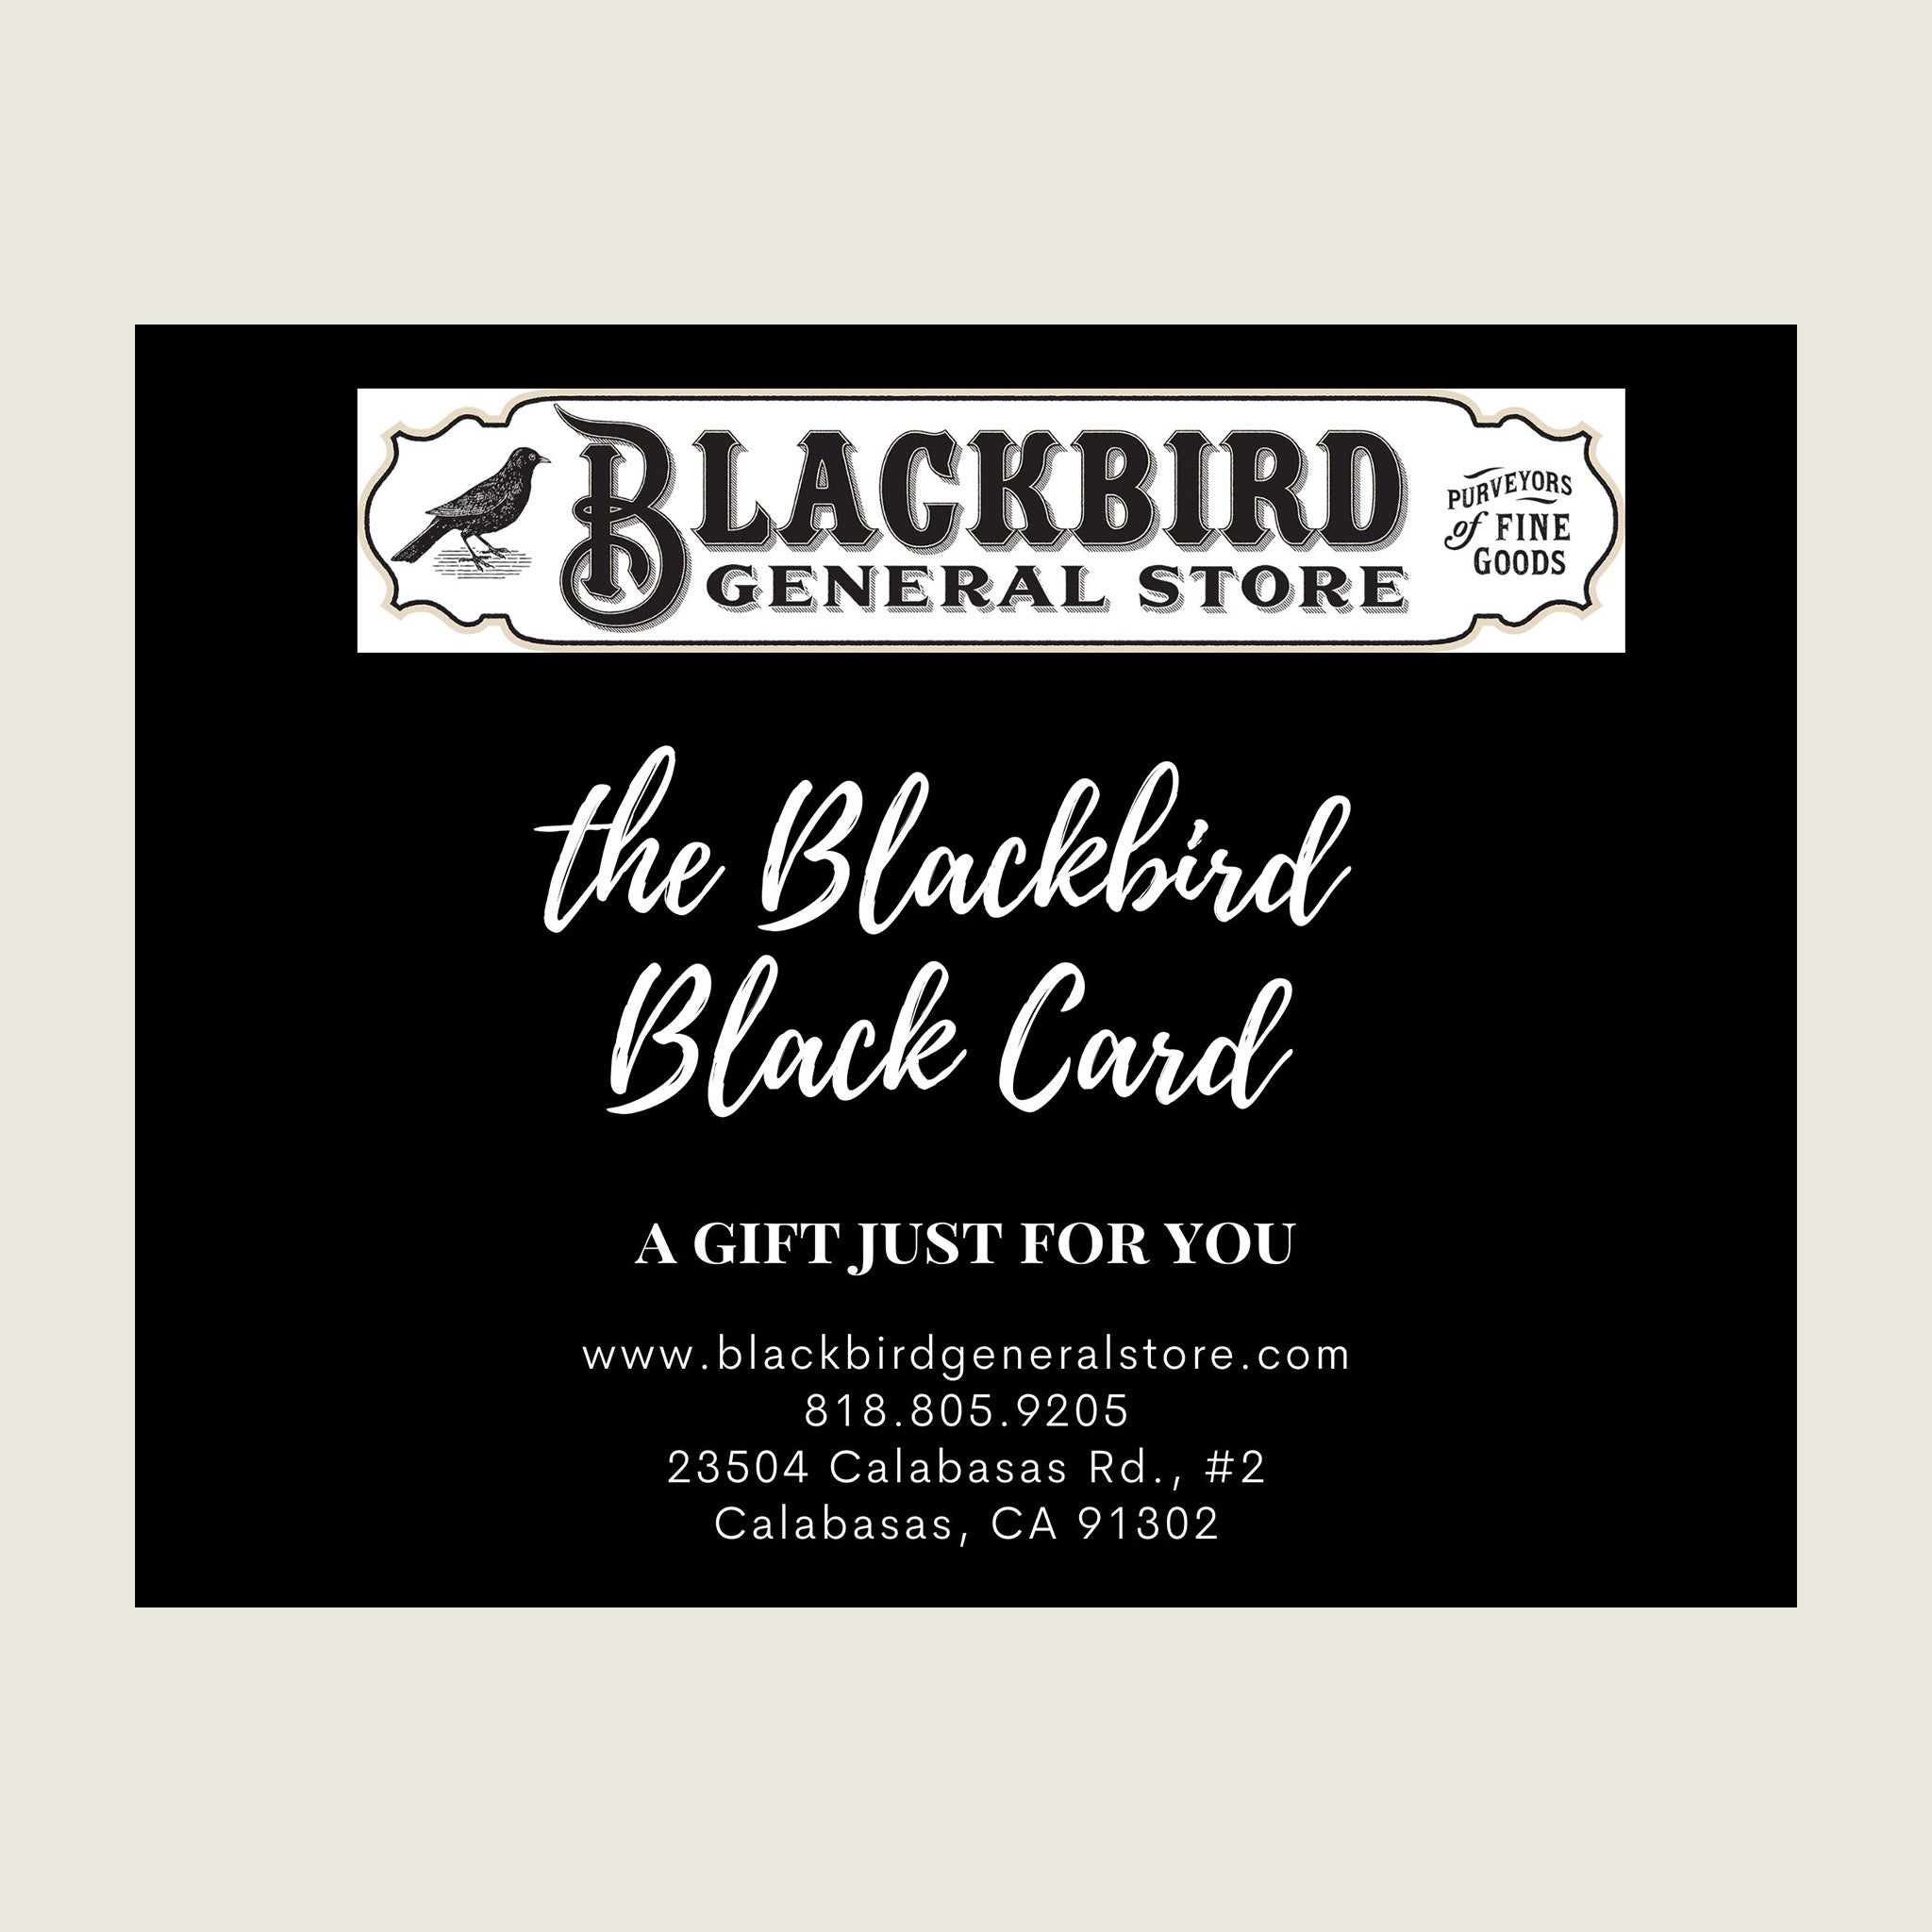 Blackbird Black Card - Blackbird General Store